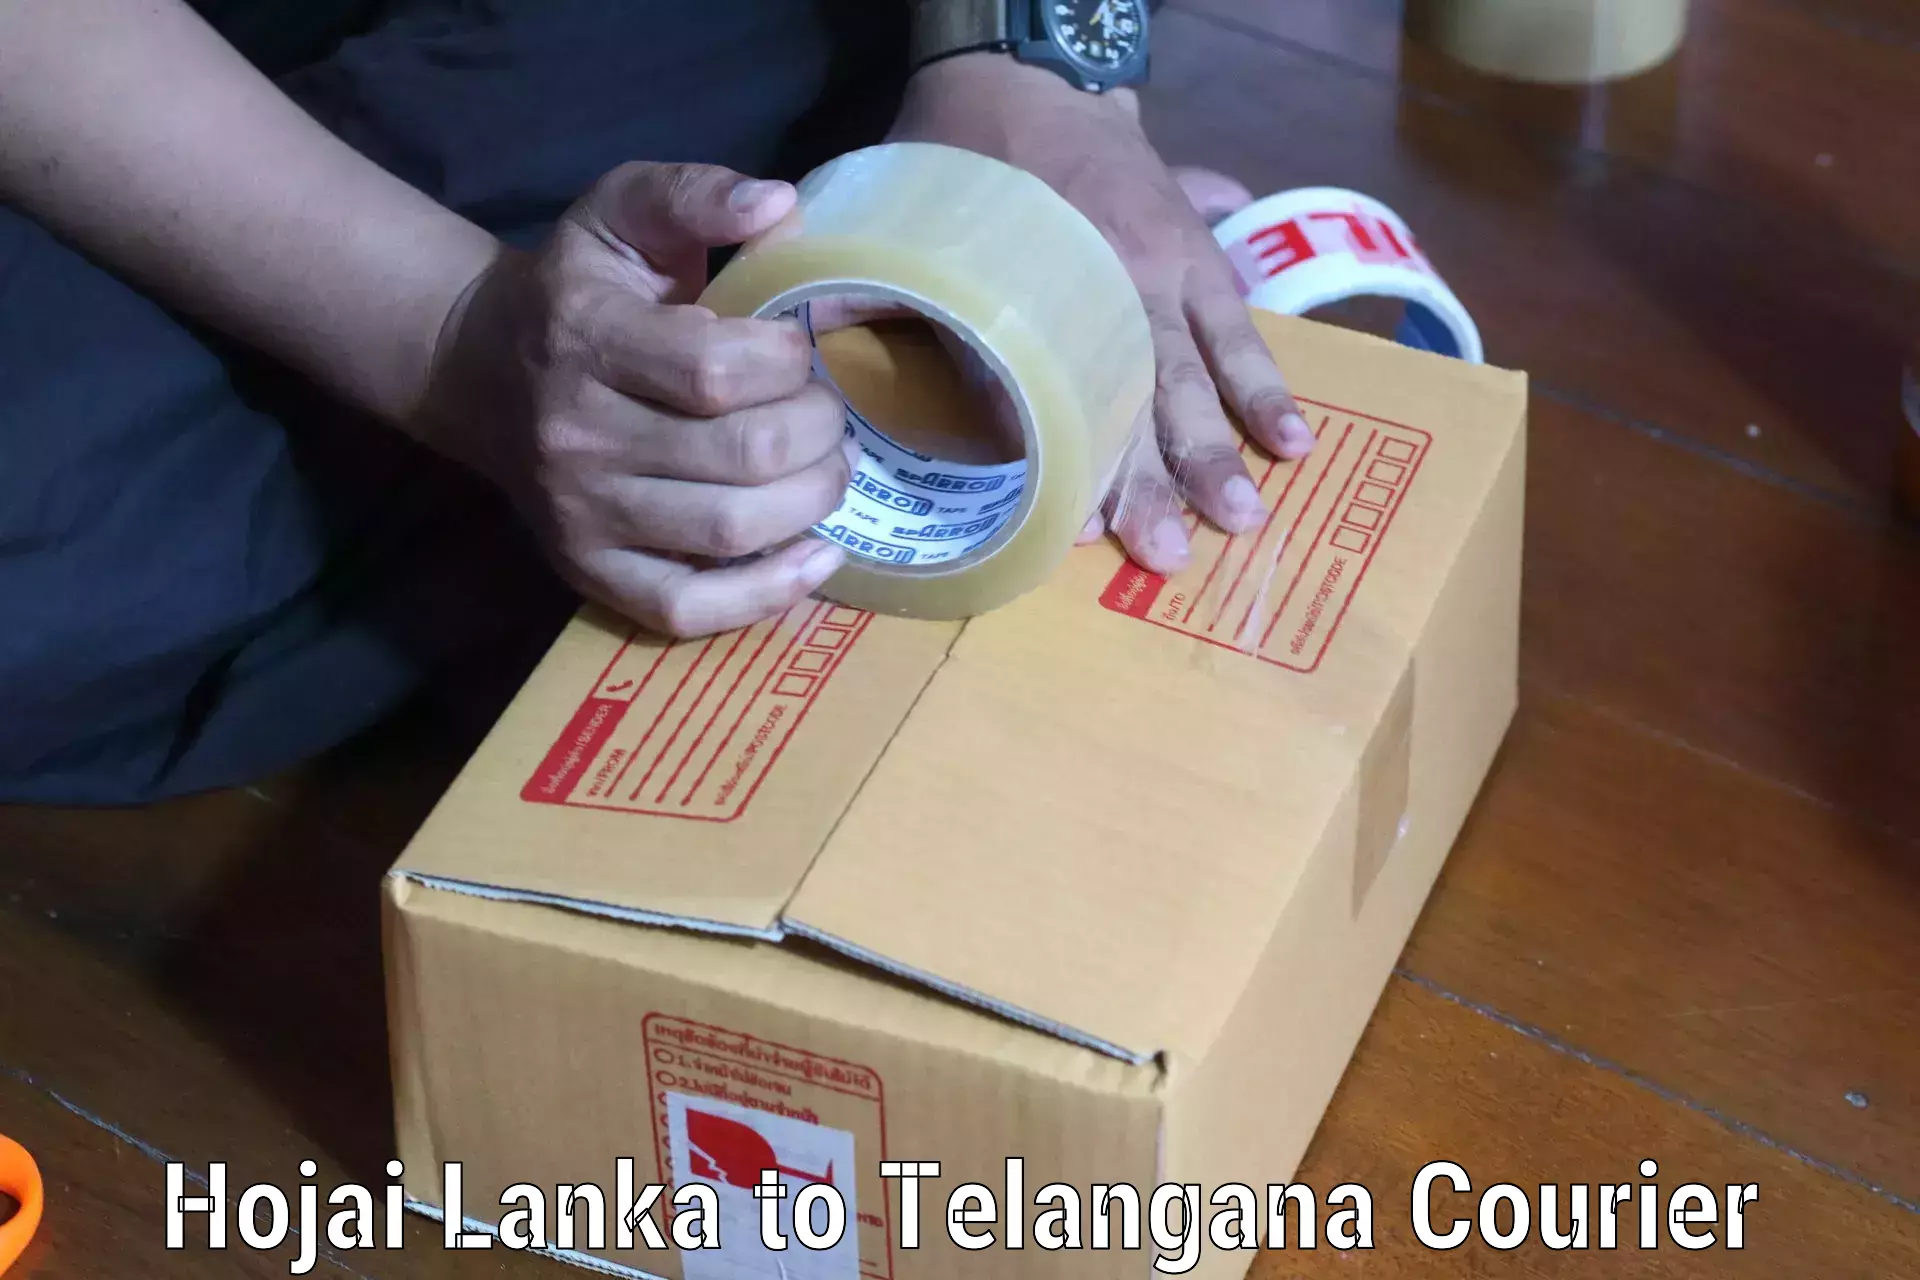 Pharmaceutical courier in Hojai Lanka to Rudrangi